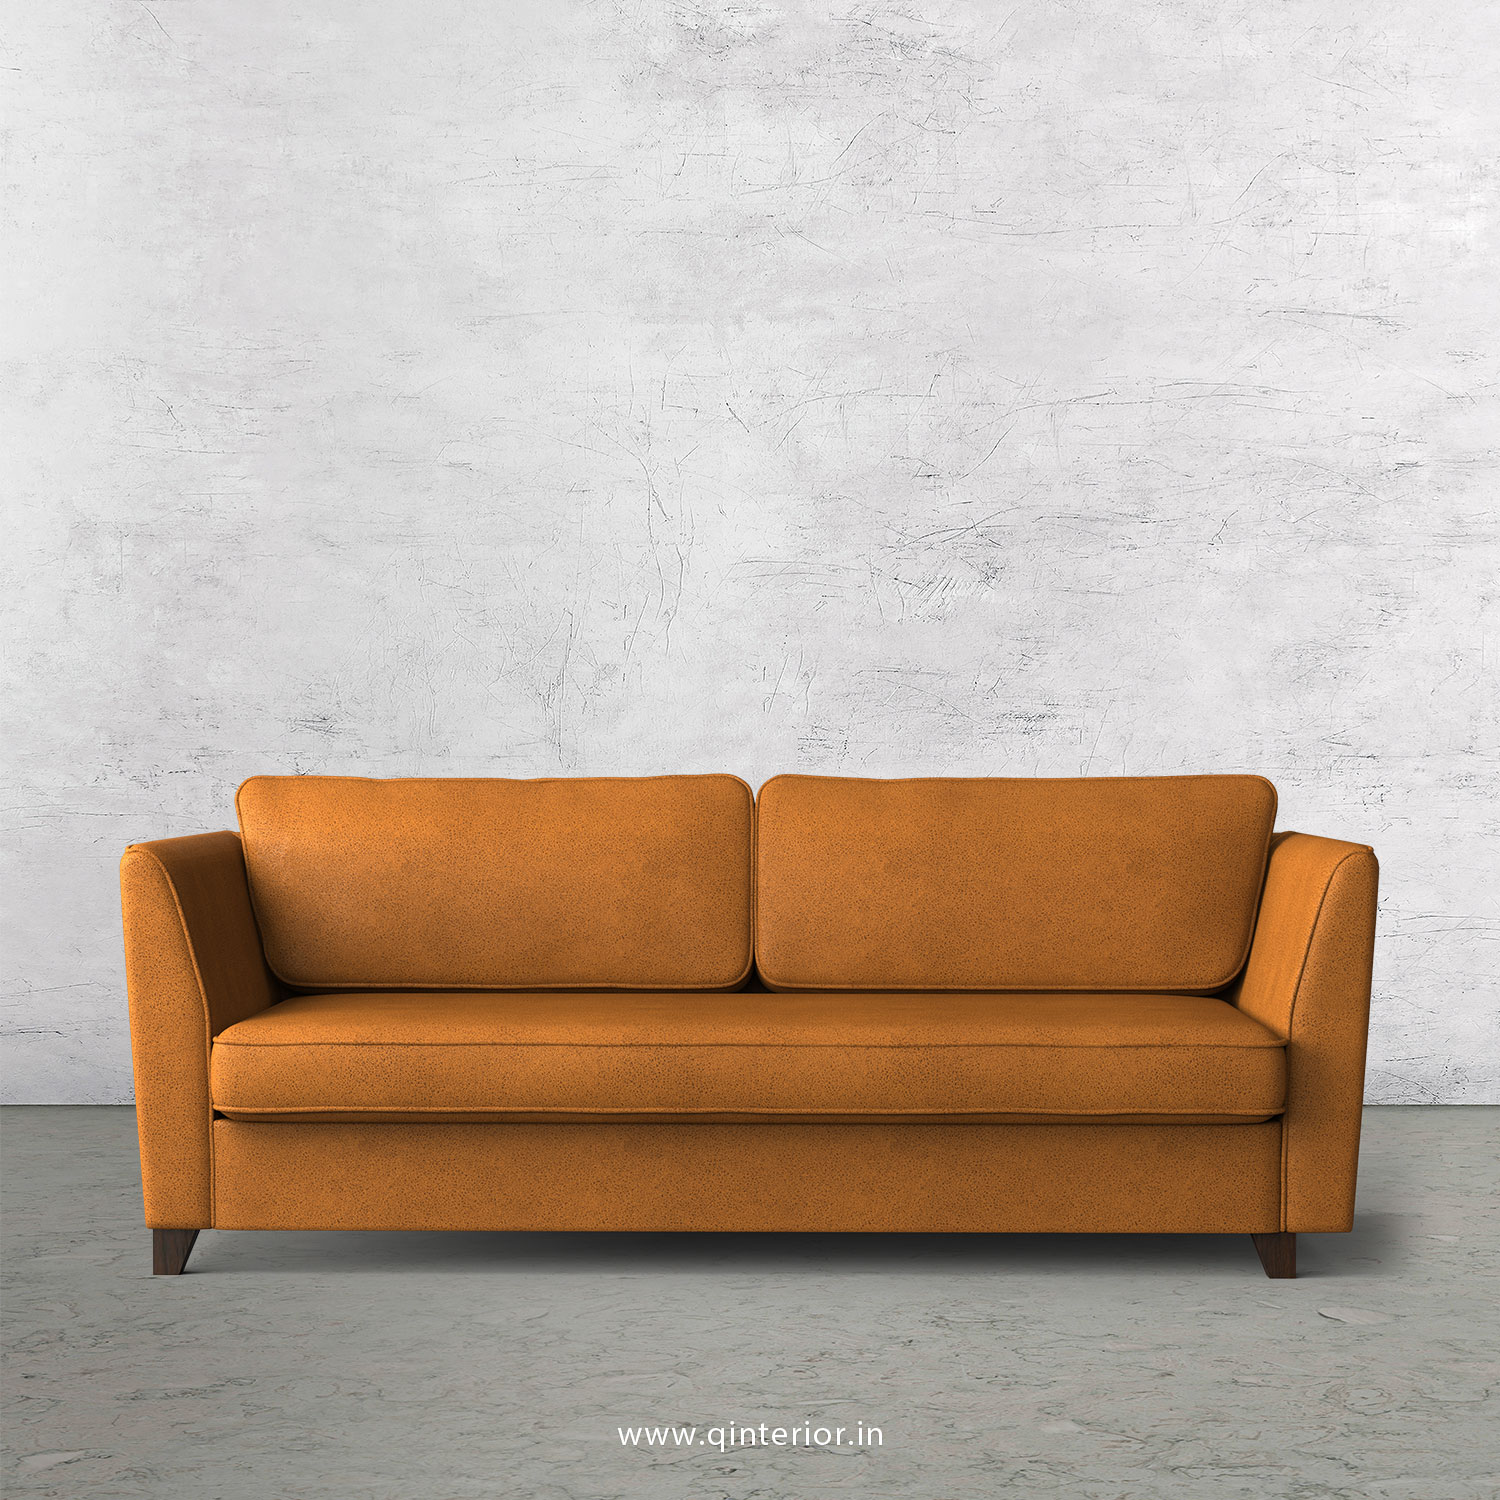 KINGSTONE 3 Seater Sofa in Fab Leather Fabric - SFA004 FL14